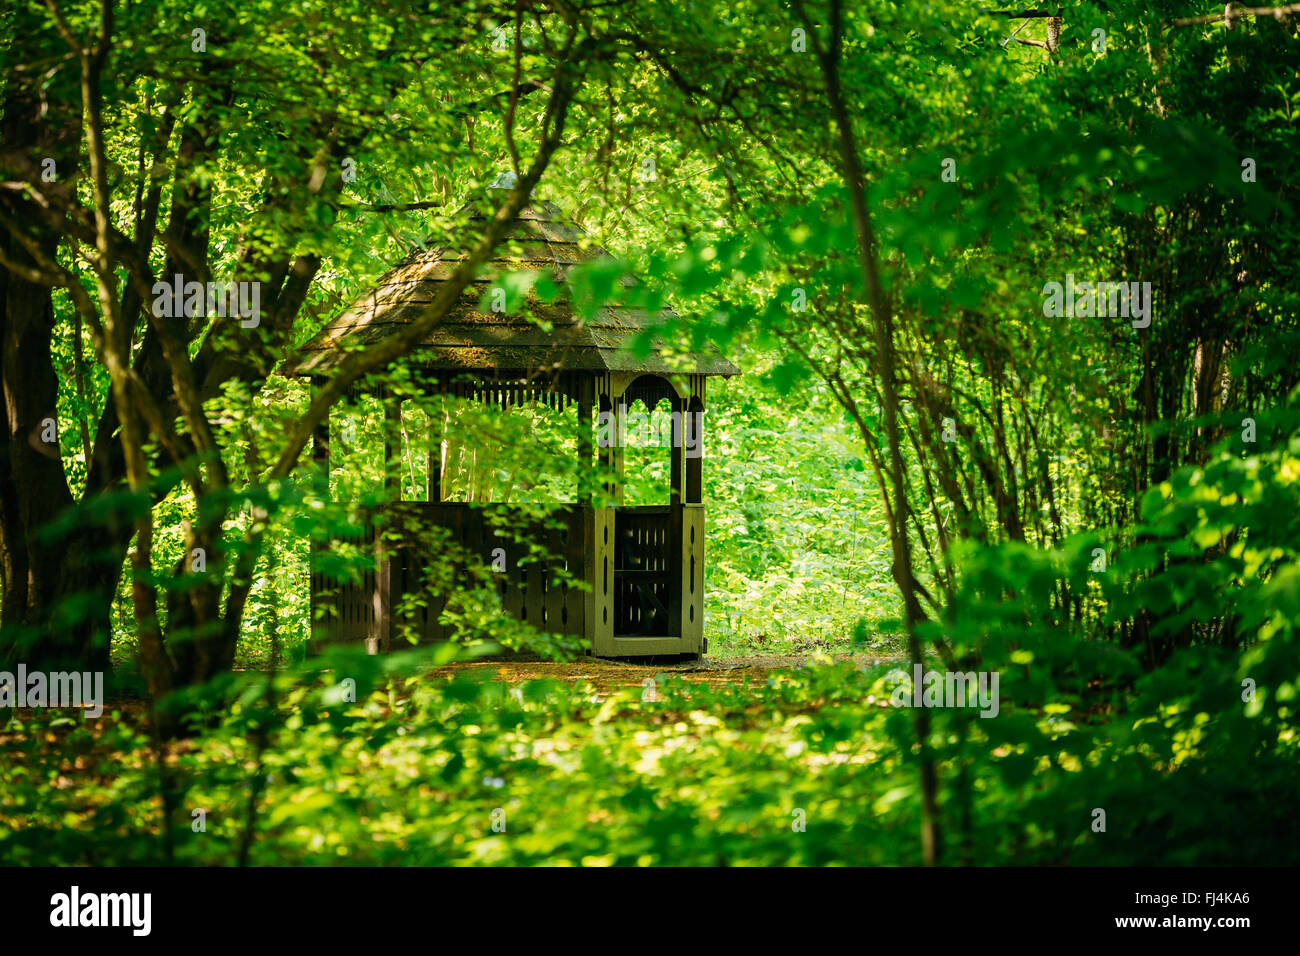 Old wooden gazebo in green garden park forest. Garden pergola with forest in background. Stock Photo